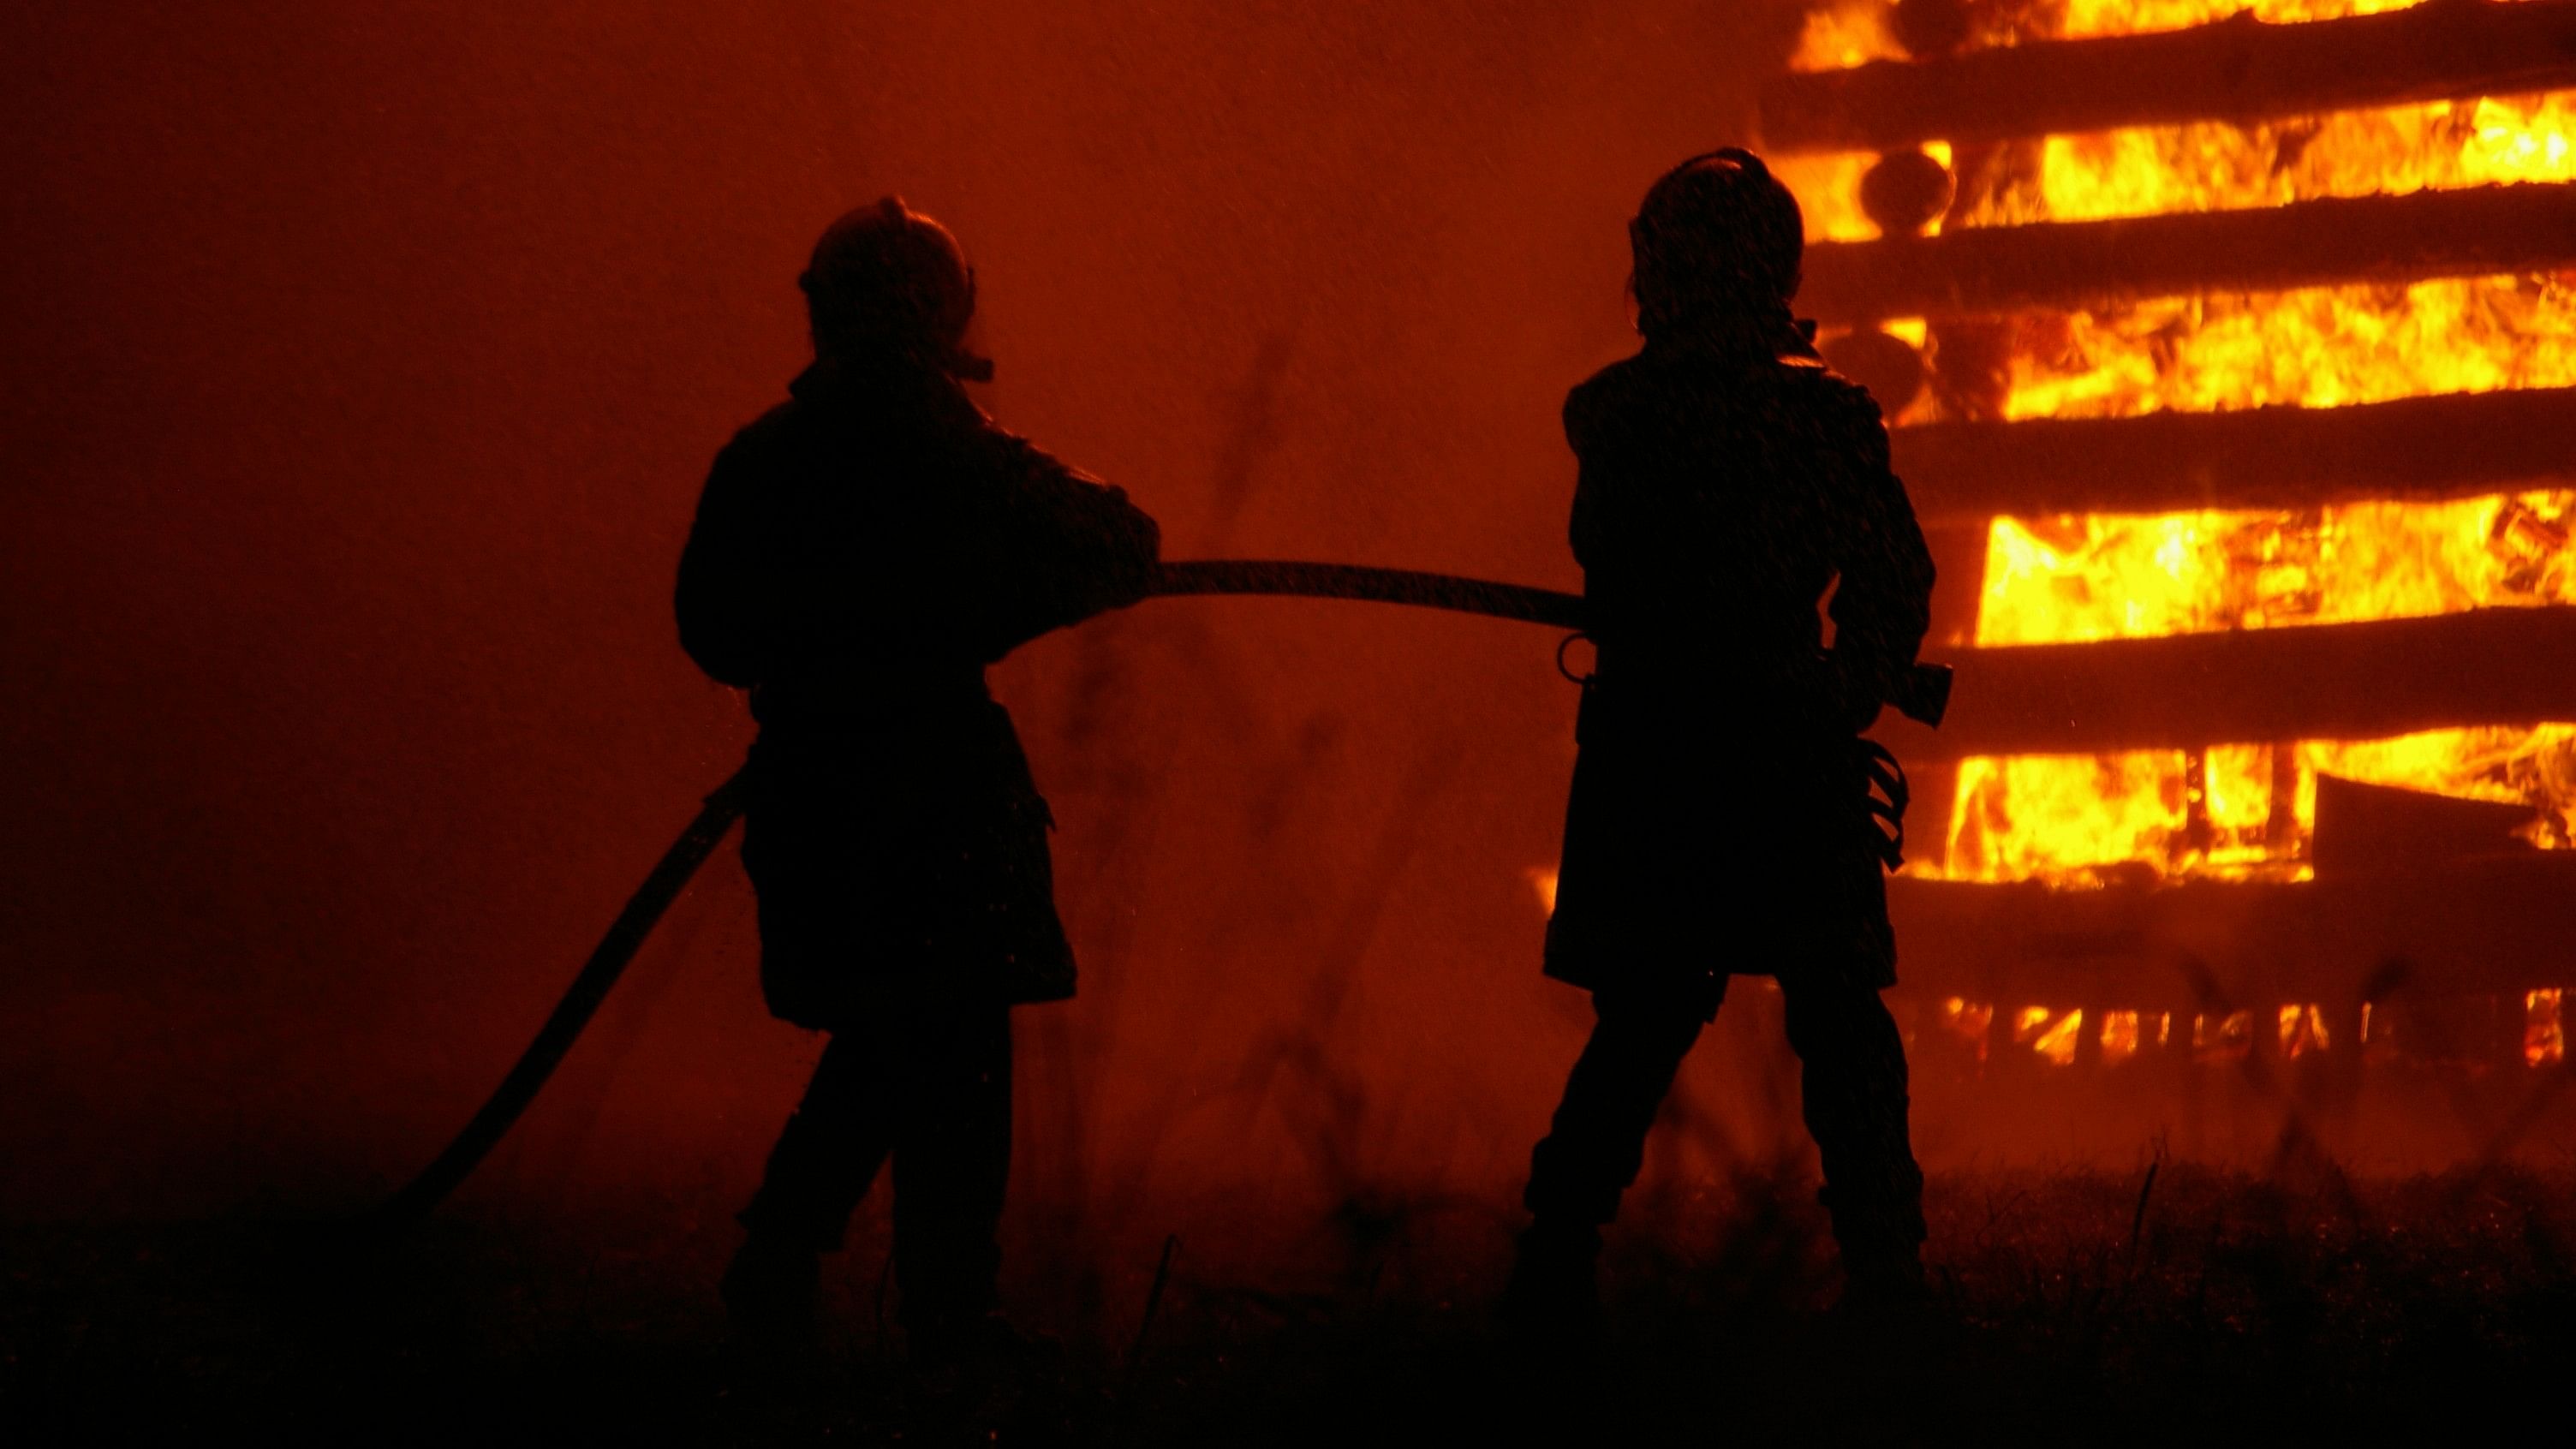 <div class="paragraphs"><p>Representative image showing firefighters dousing a blaze.</p></div>